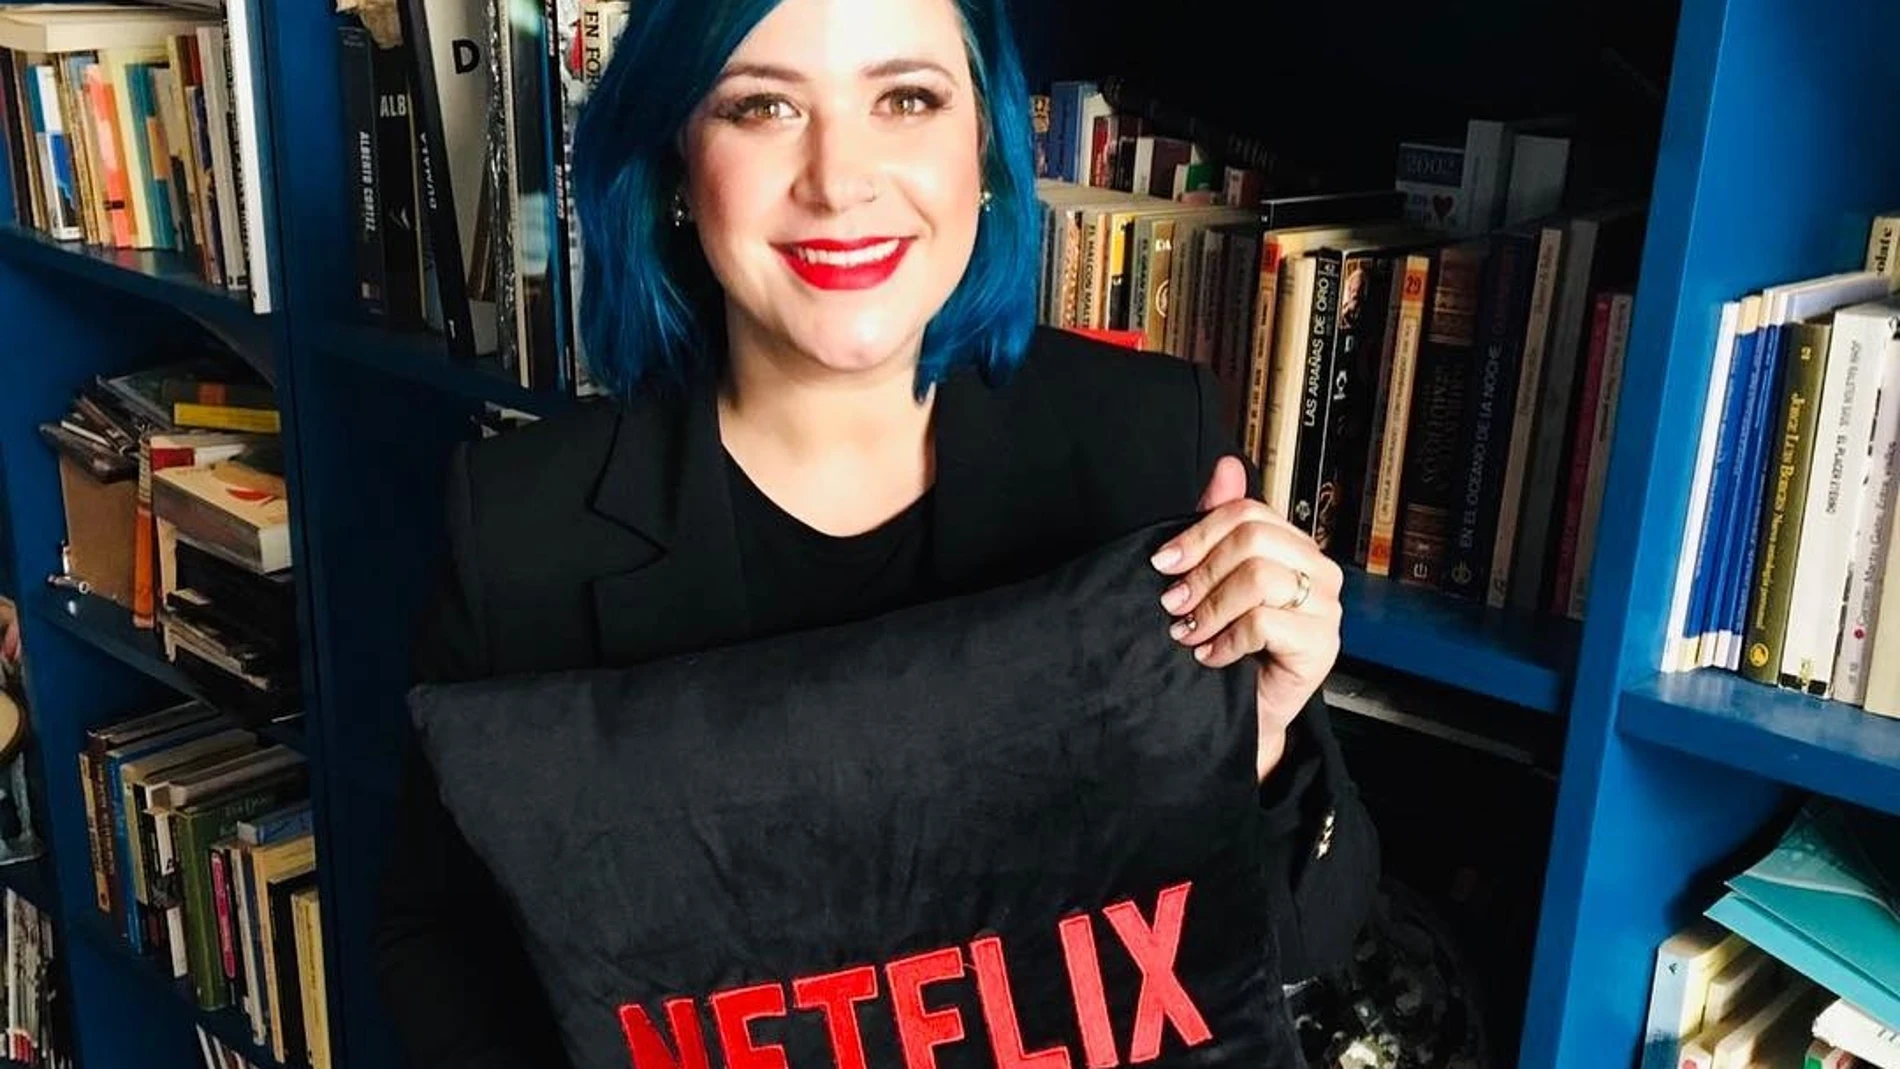 Valeria' de Netflix en 5 claves según Elisabet Benavent